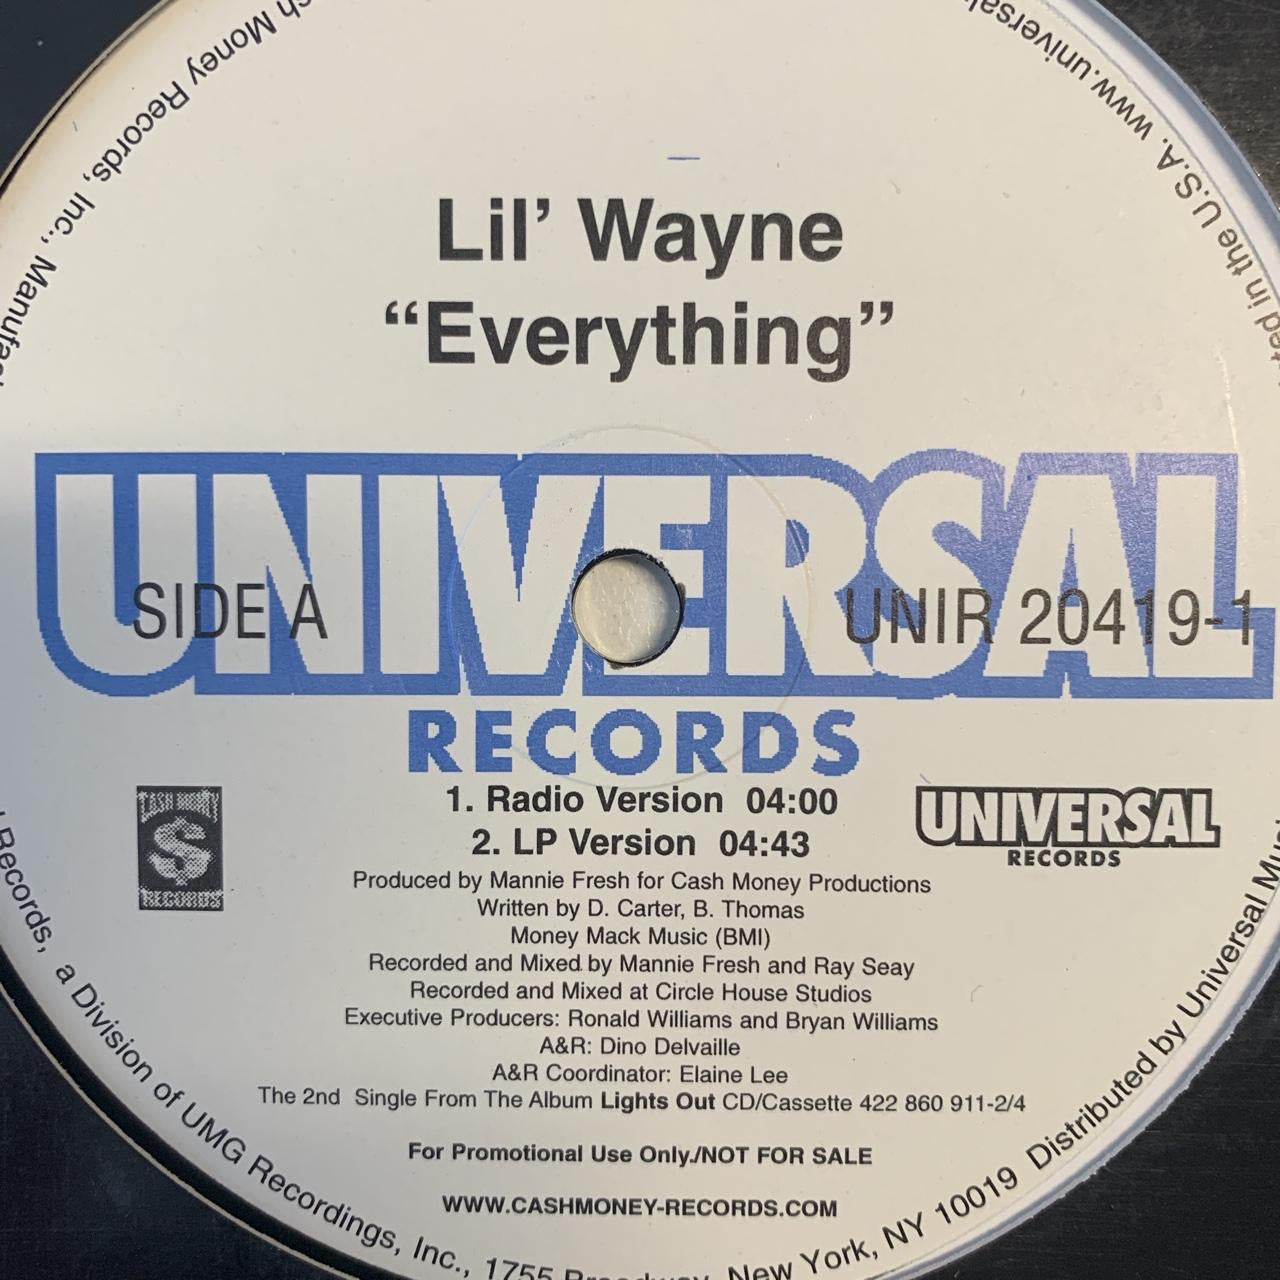 Lil’ Wayne “Get off the Corner” 4 Version 12inch Vinyl Single